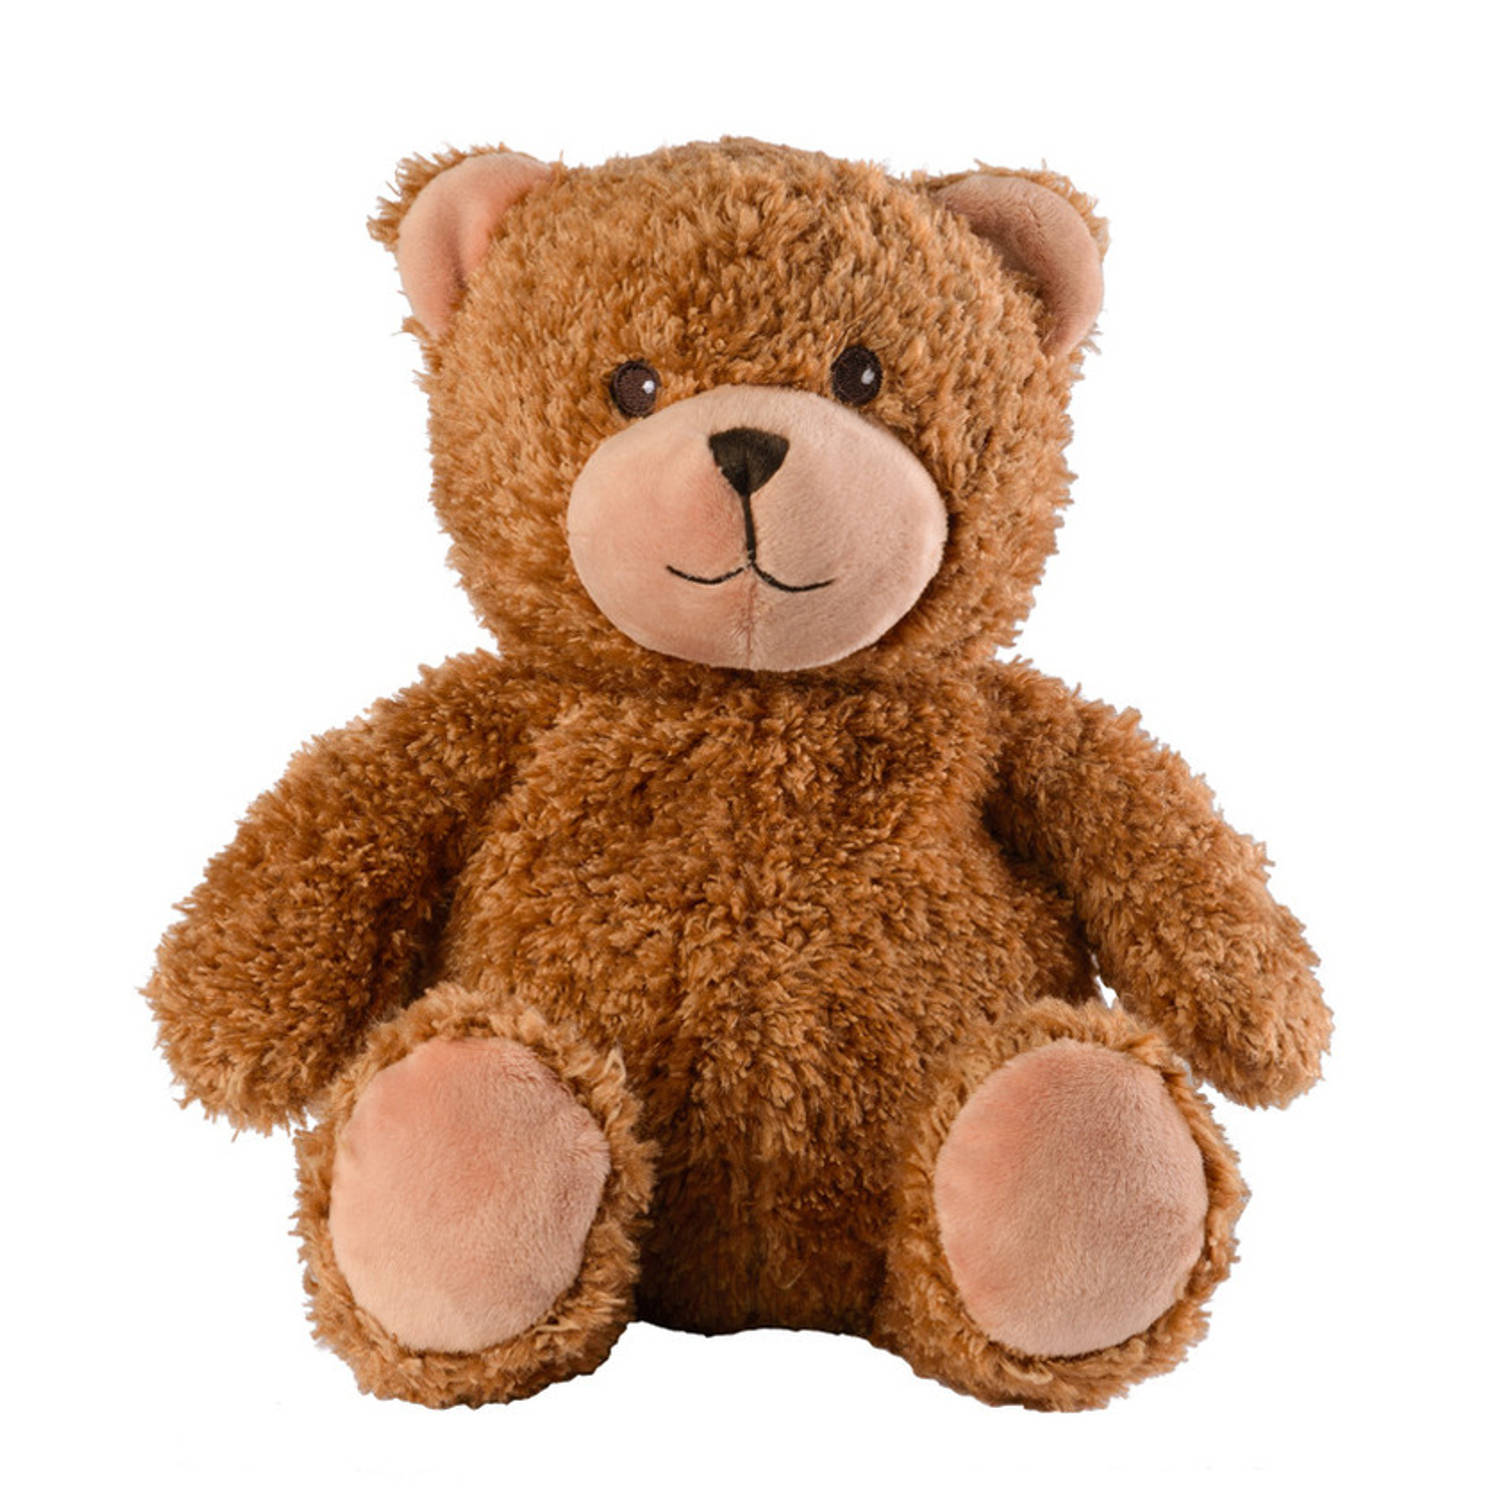 Warmte/magnetron opwarm knuffel teddybeer - Opwarmknuffels